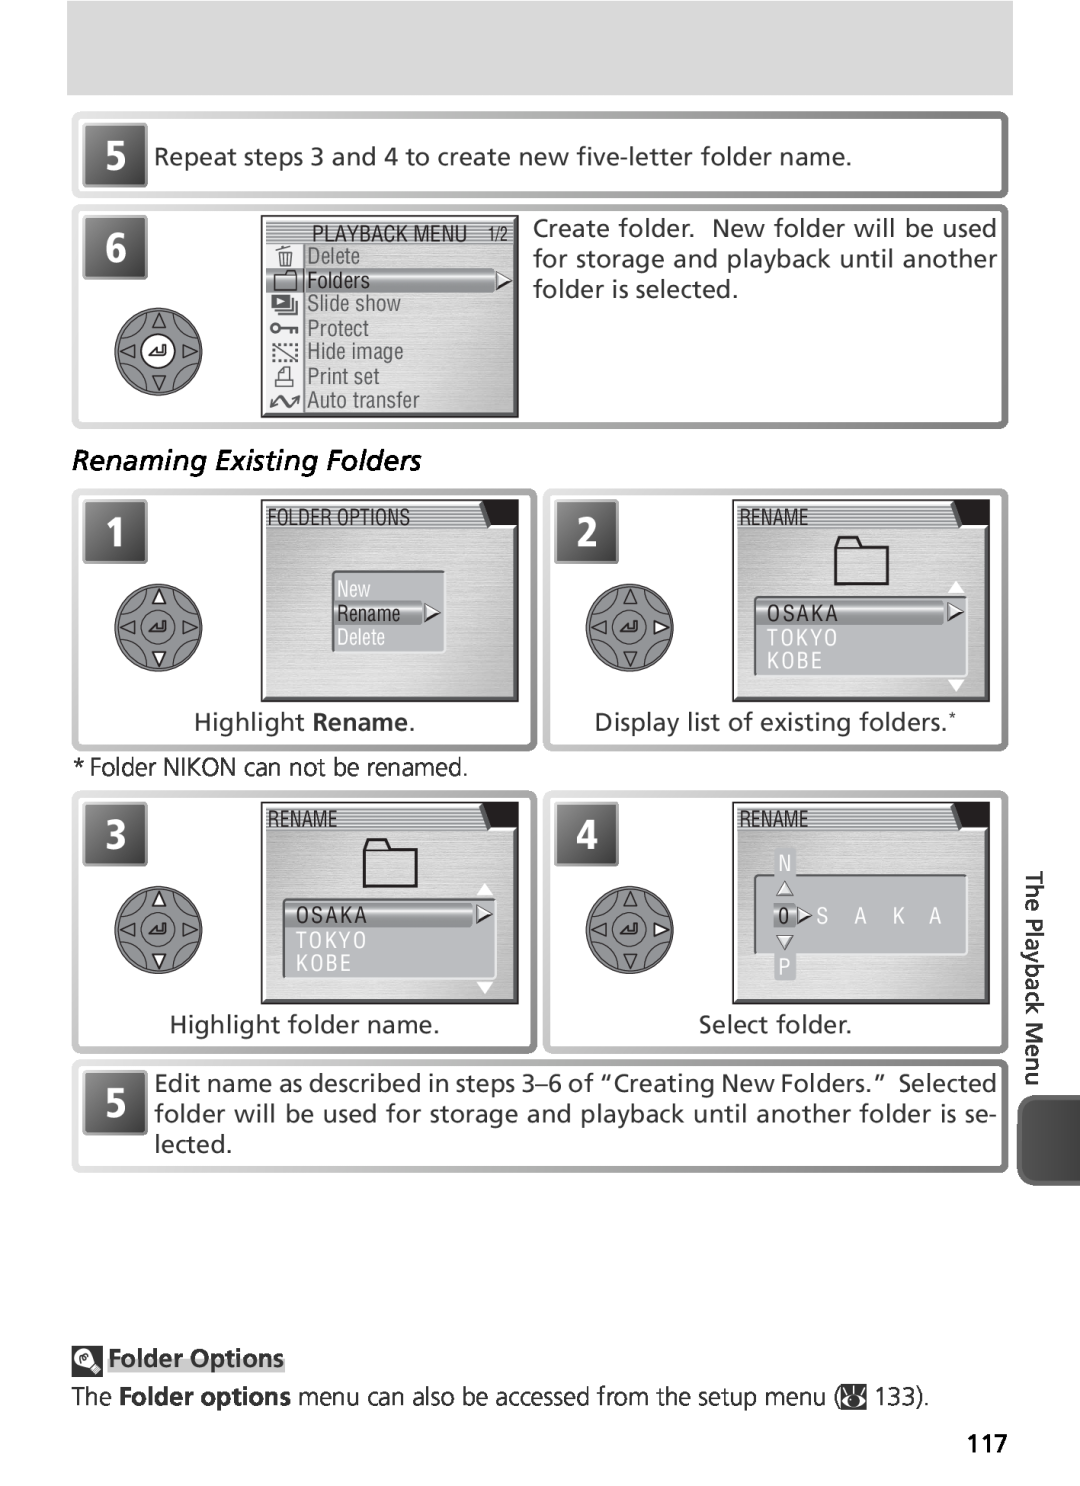 Nikon COOLPIX8800 manual Renaming Existing Folders, Folder Options 